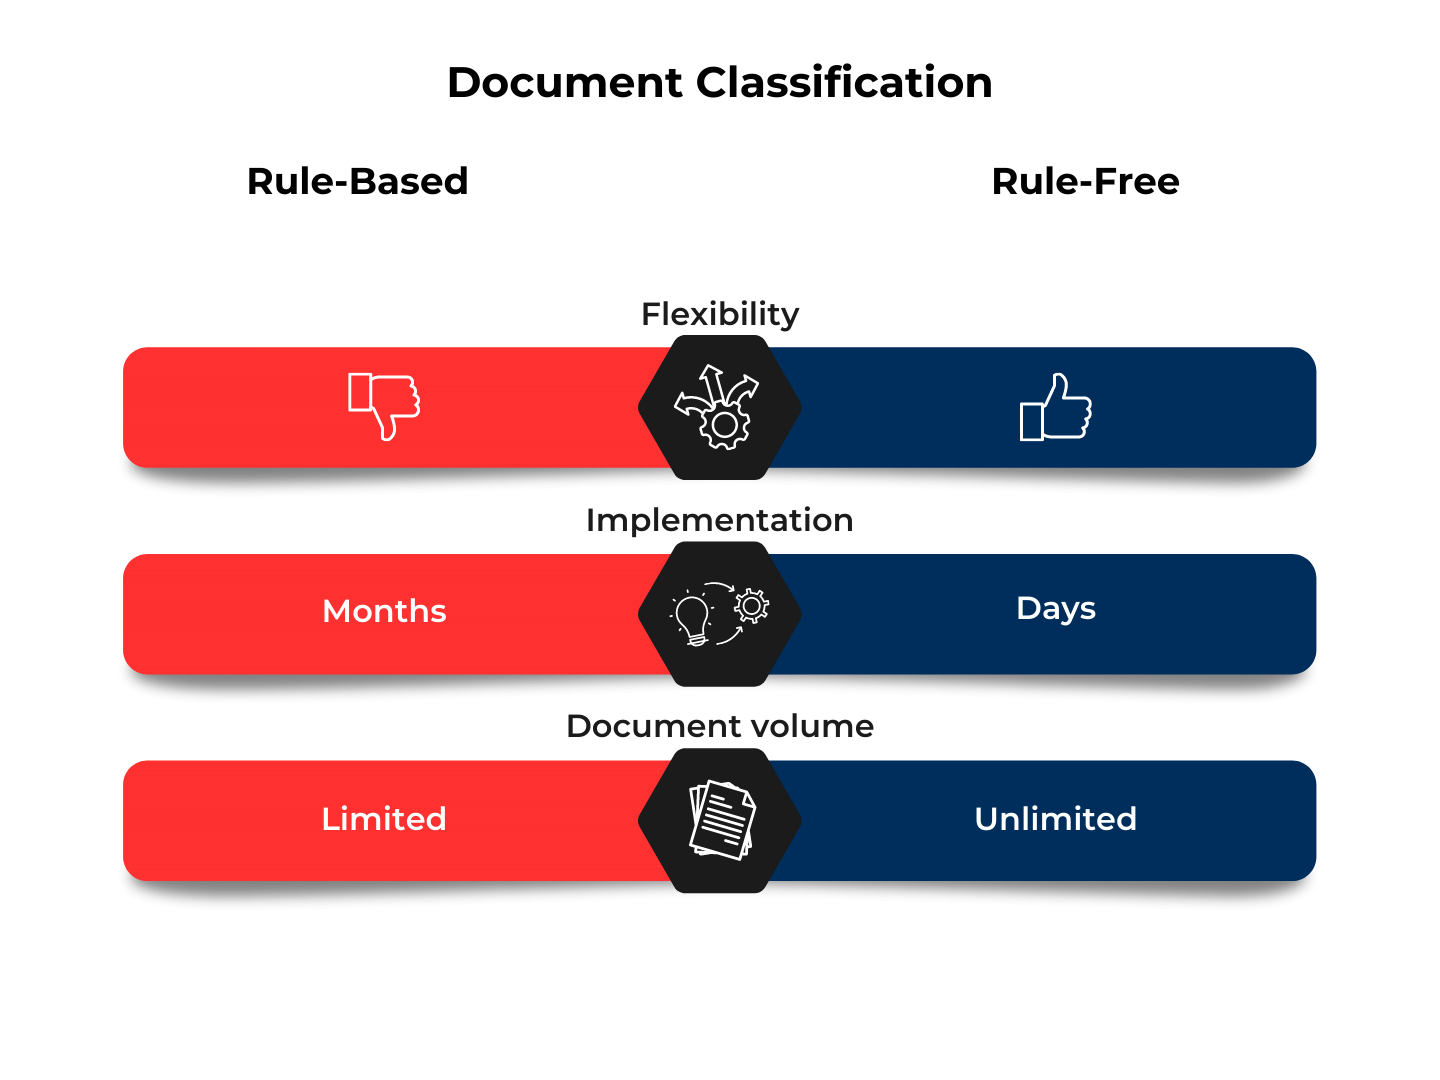 Rule-Based vs. Rule-Free Document Classification